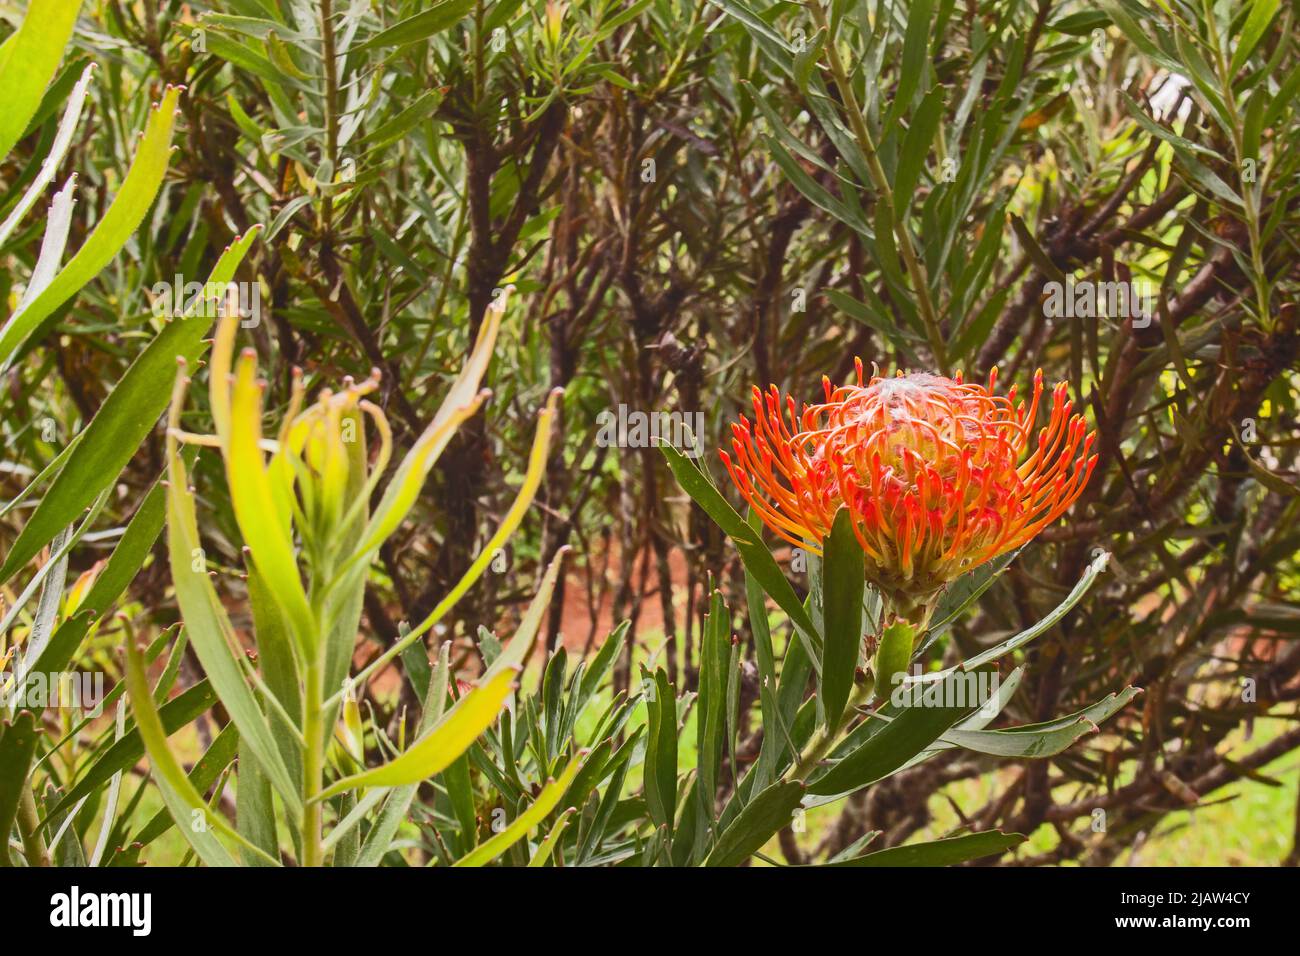 A single Picushion Protea flower. (Leucospermum cordifolium) Stock Photo